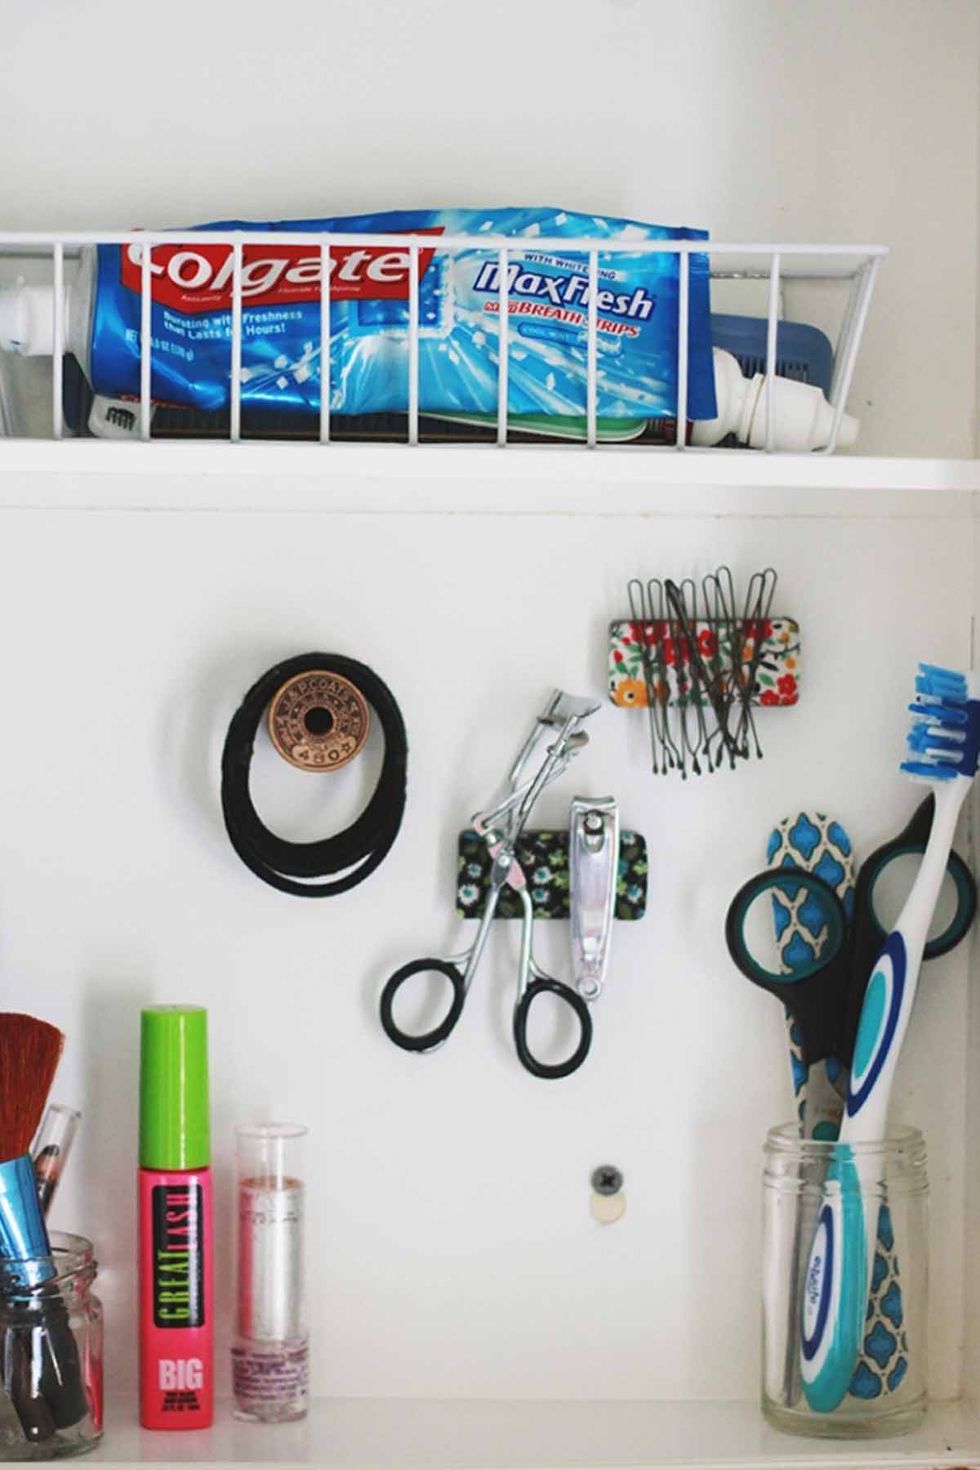 41 Clever Bathroom Storage Ideas, Clever Bathroom Organization